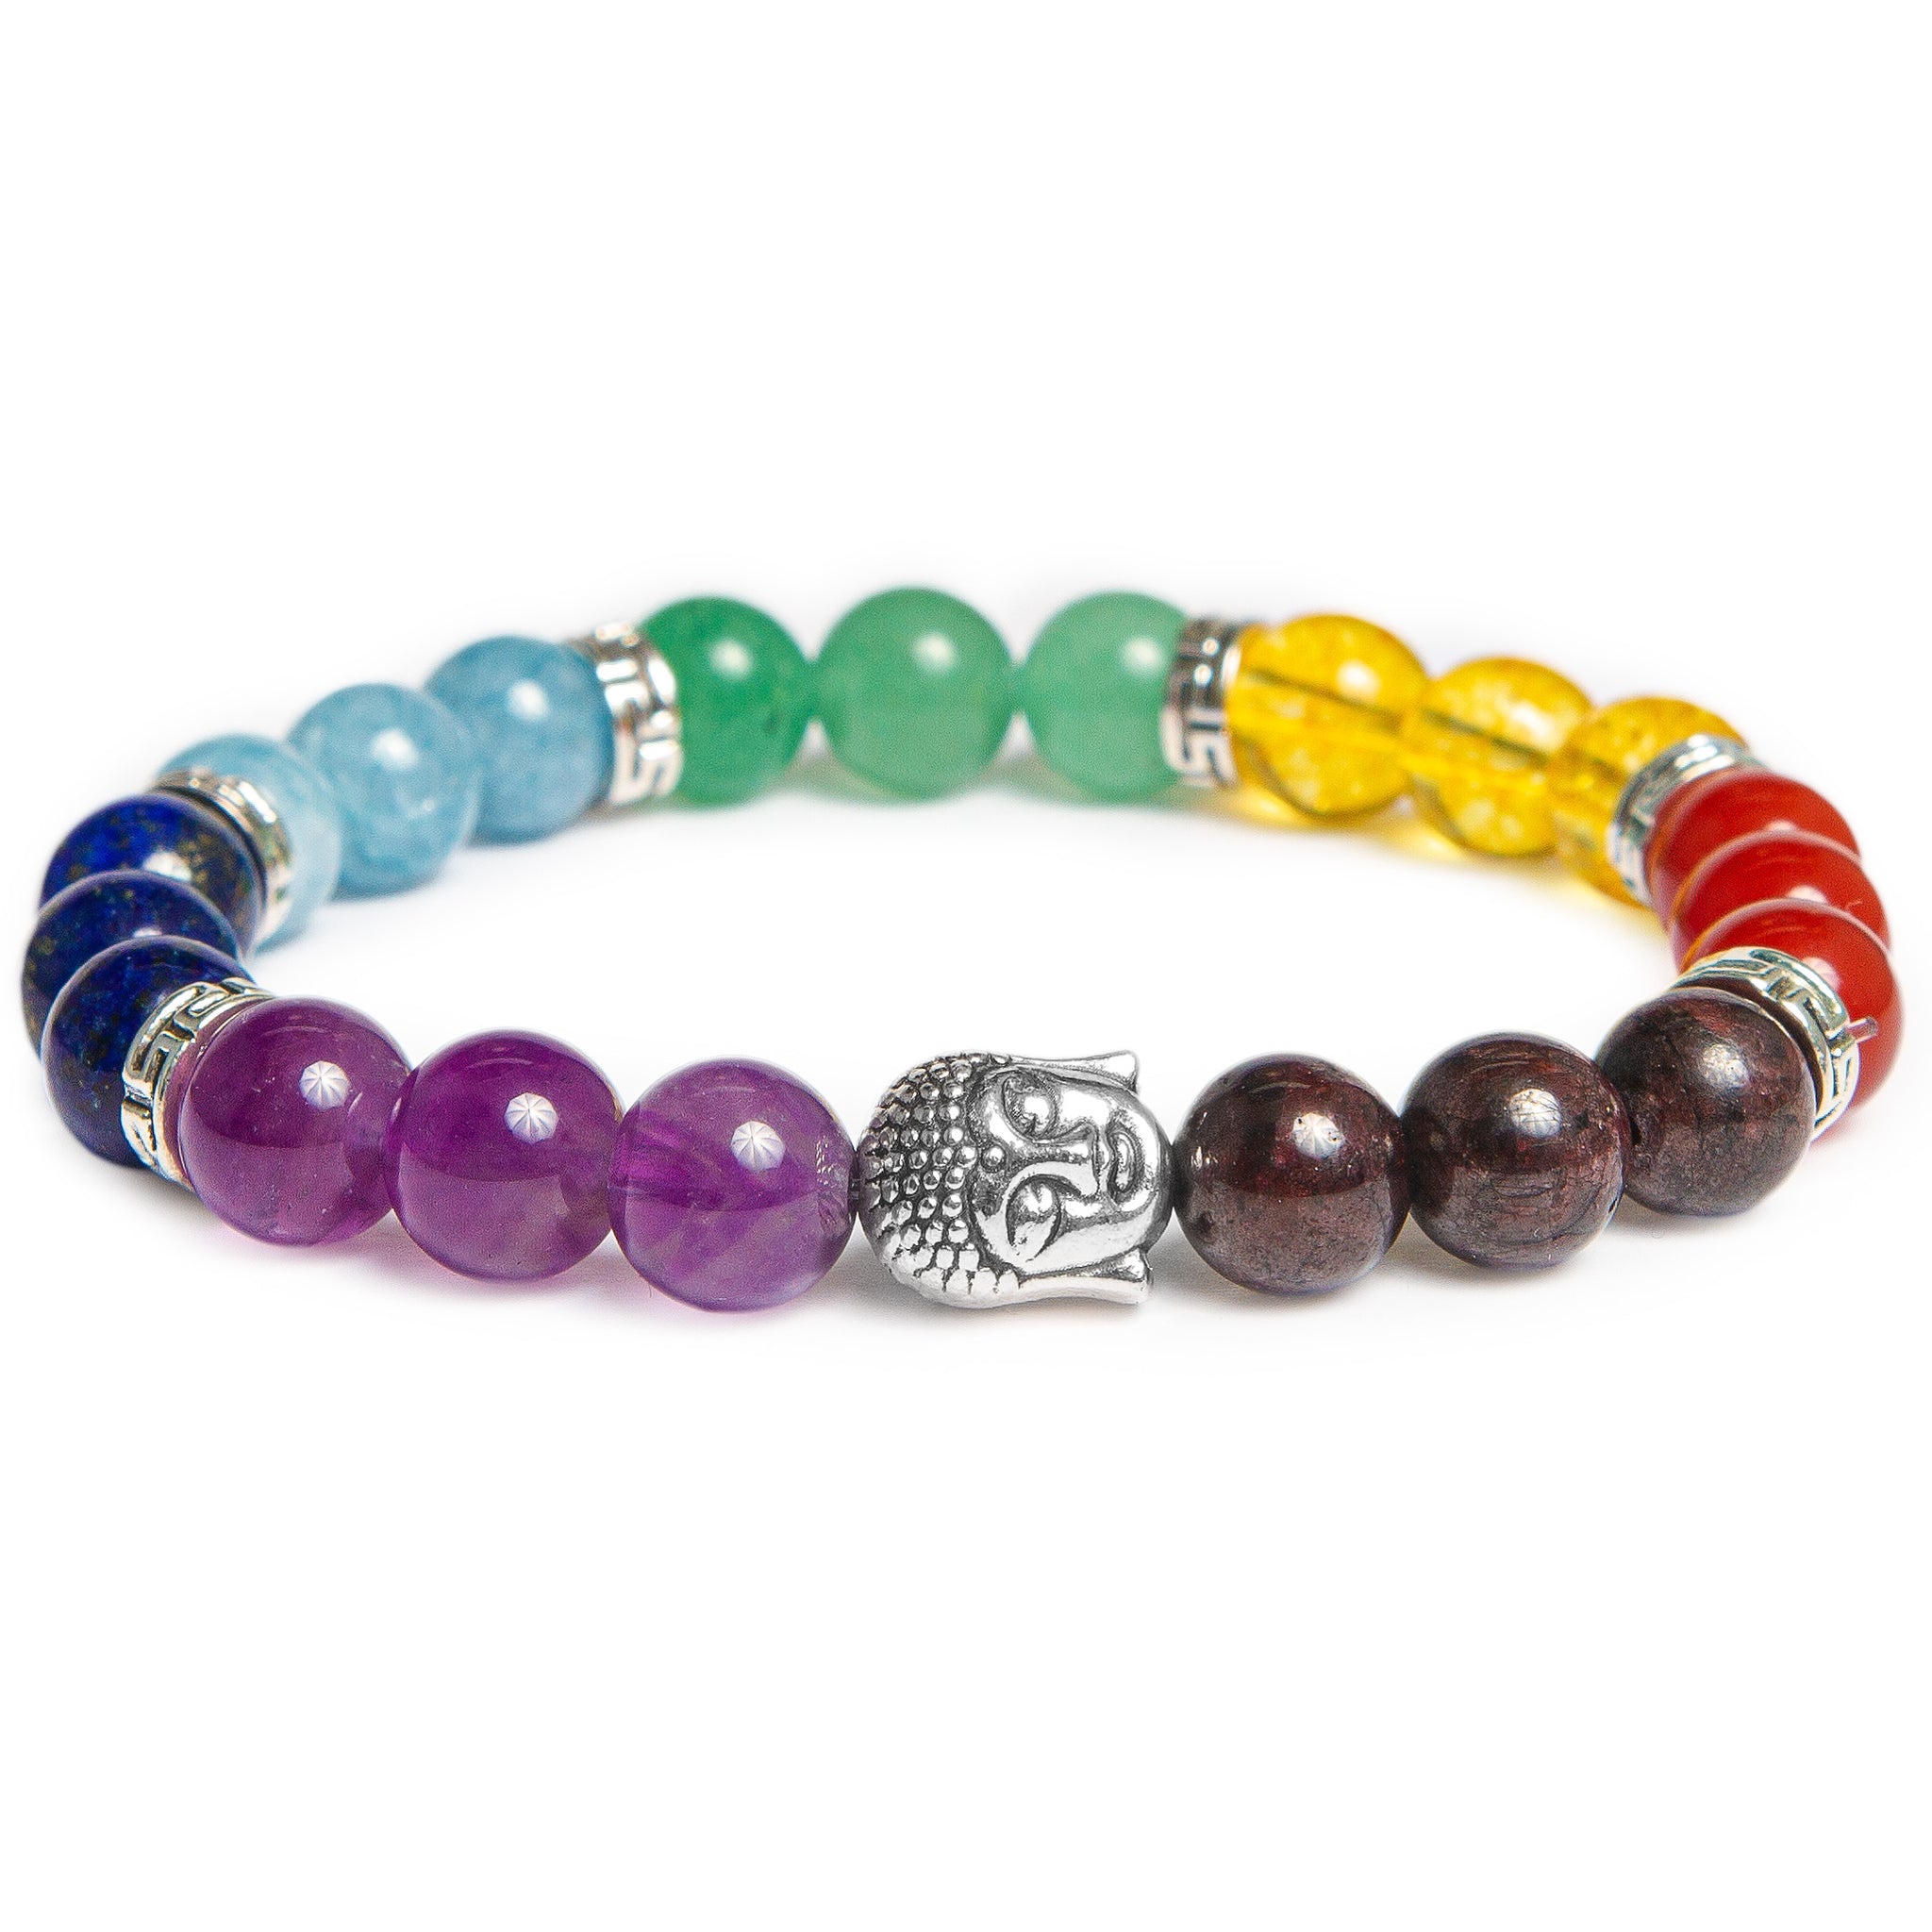 Chakra Bracelet for Woman with Buddha - Stretch Yoga Bracelet - Meditation Bracelet